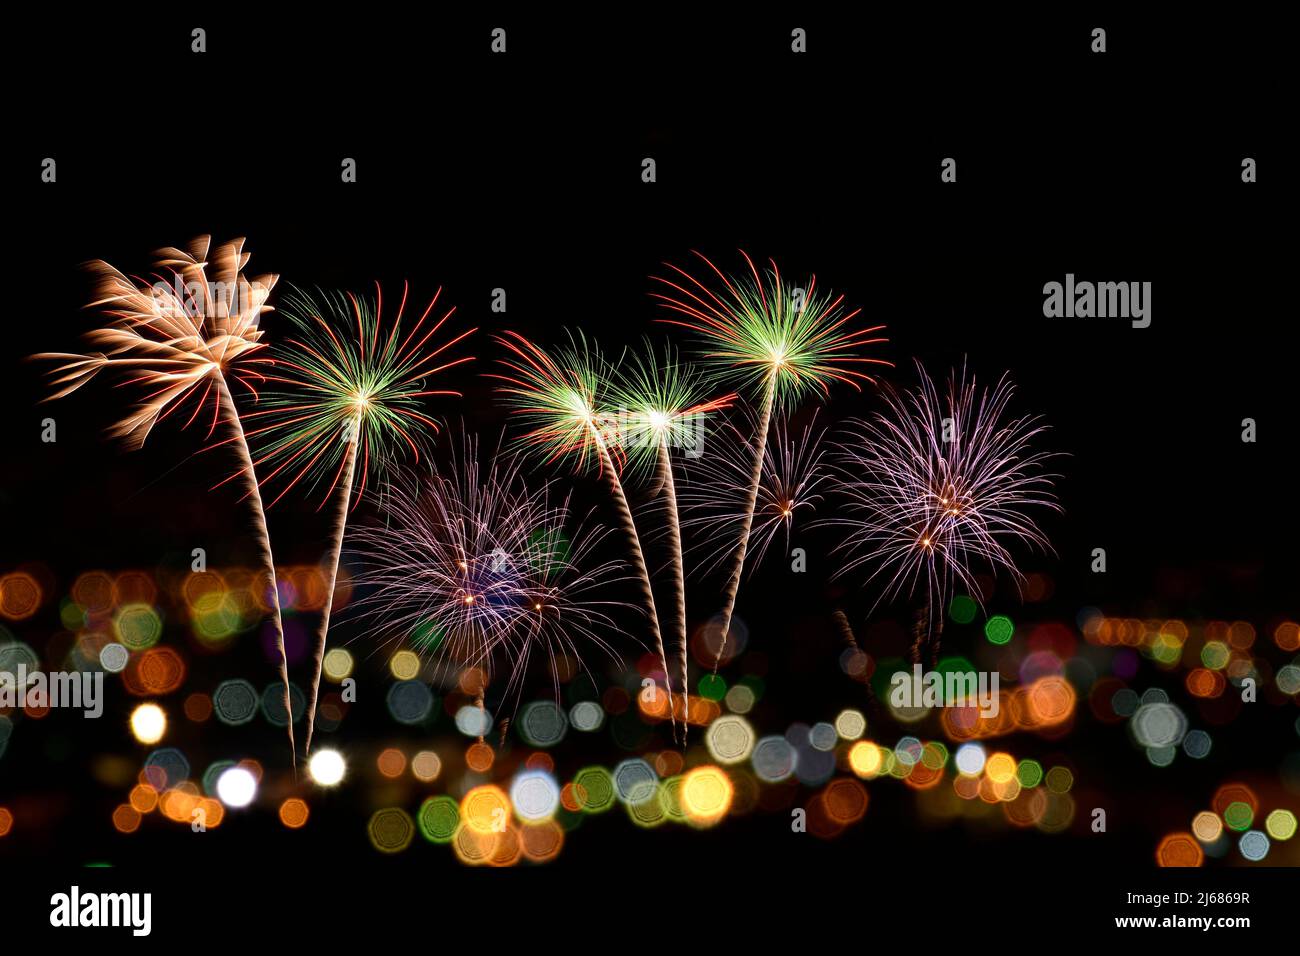 Colorful fireworks celebration and the city night light background on midnight sky. Stock Photo